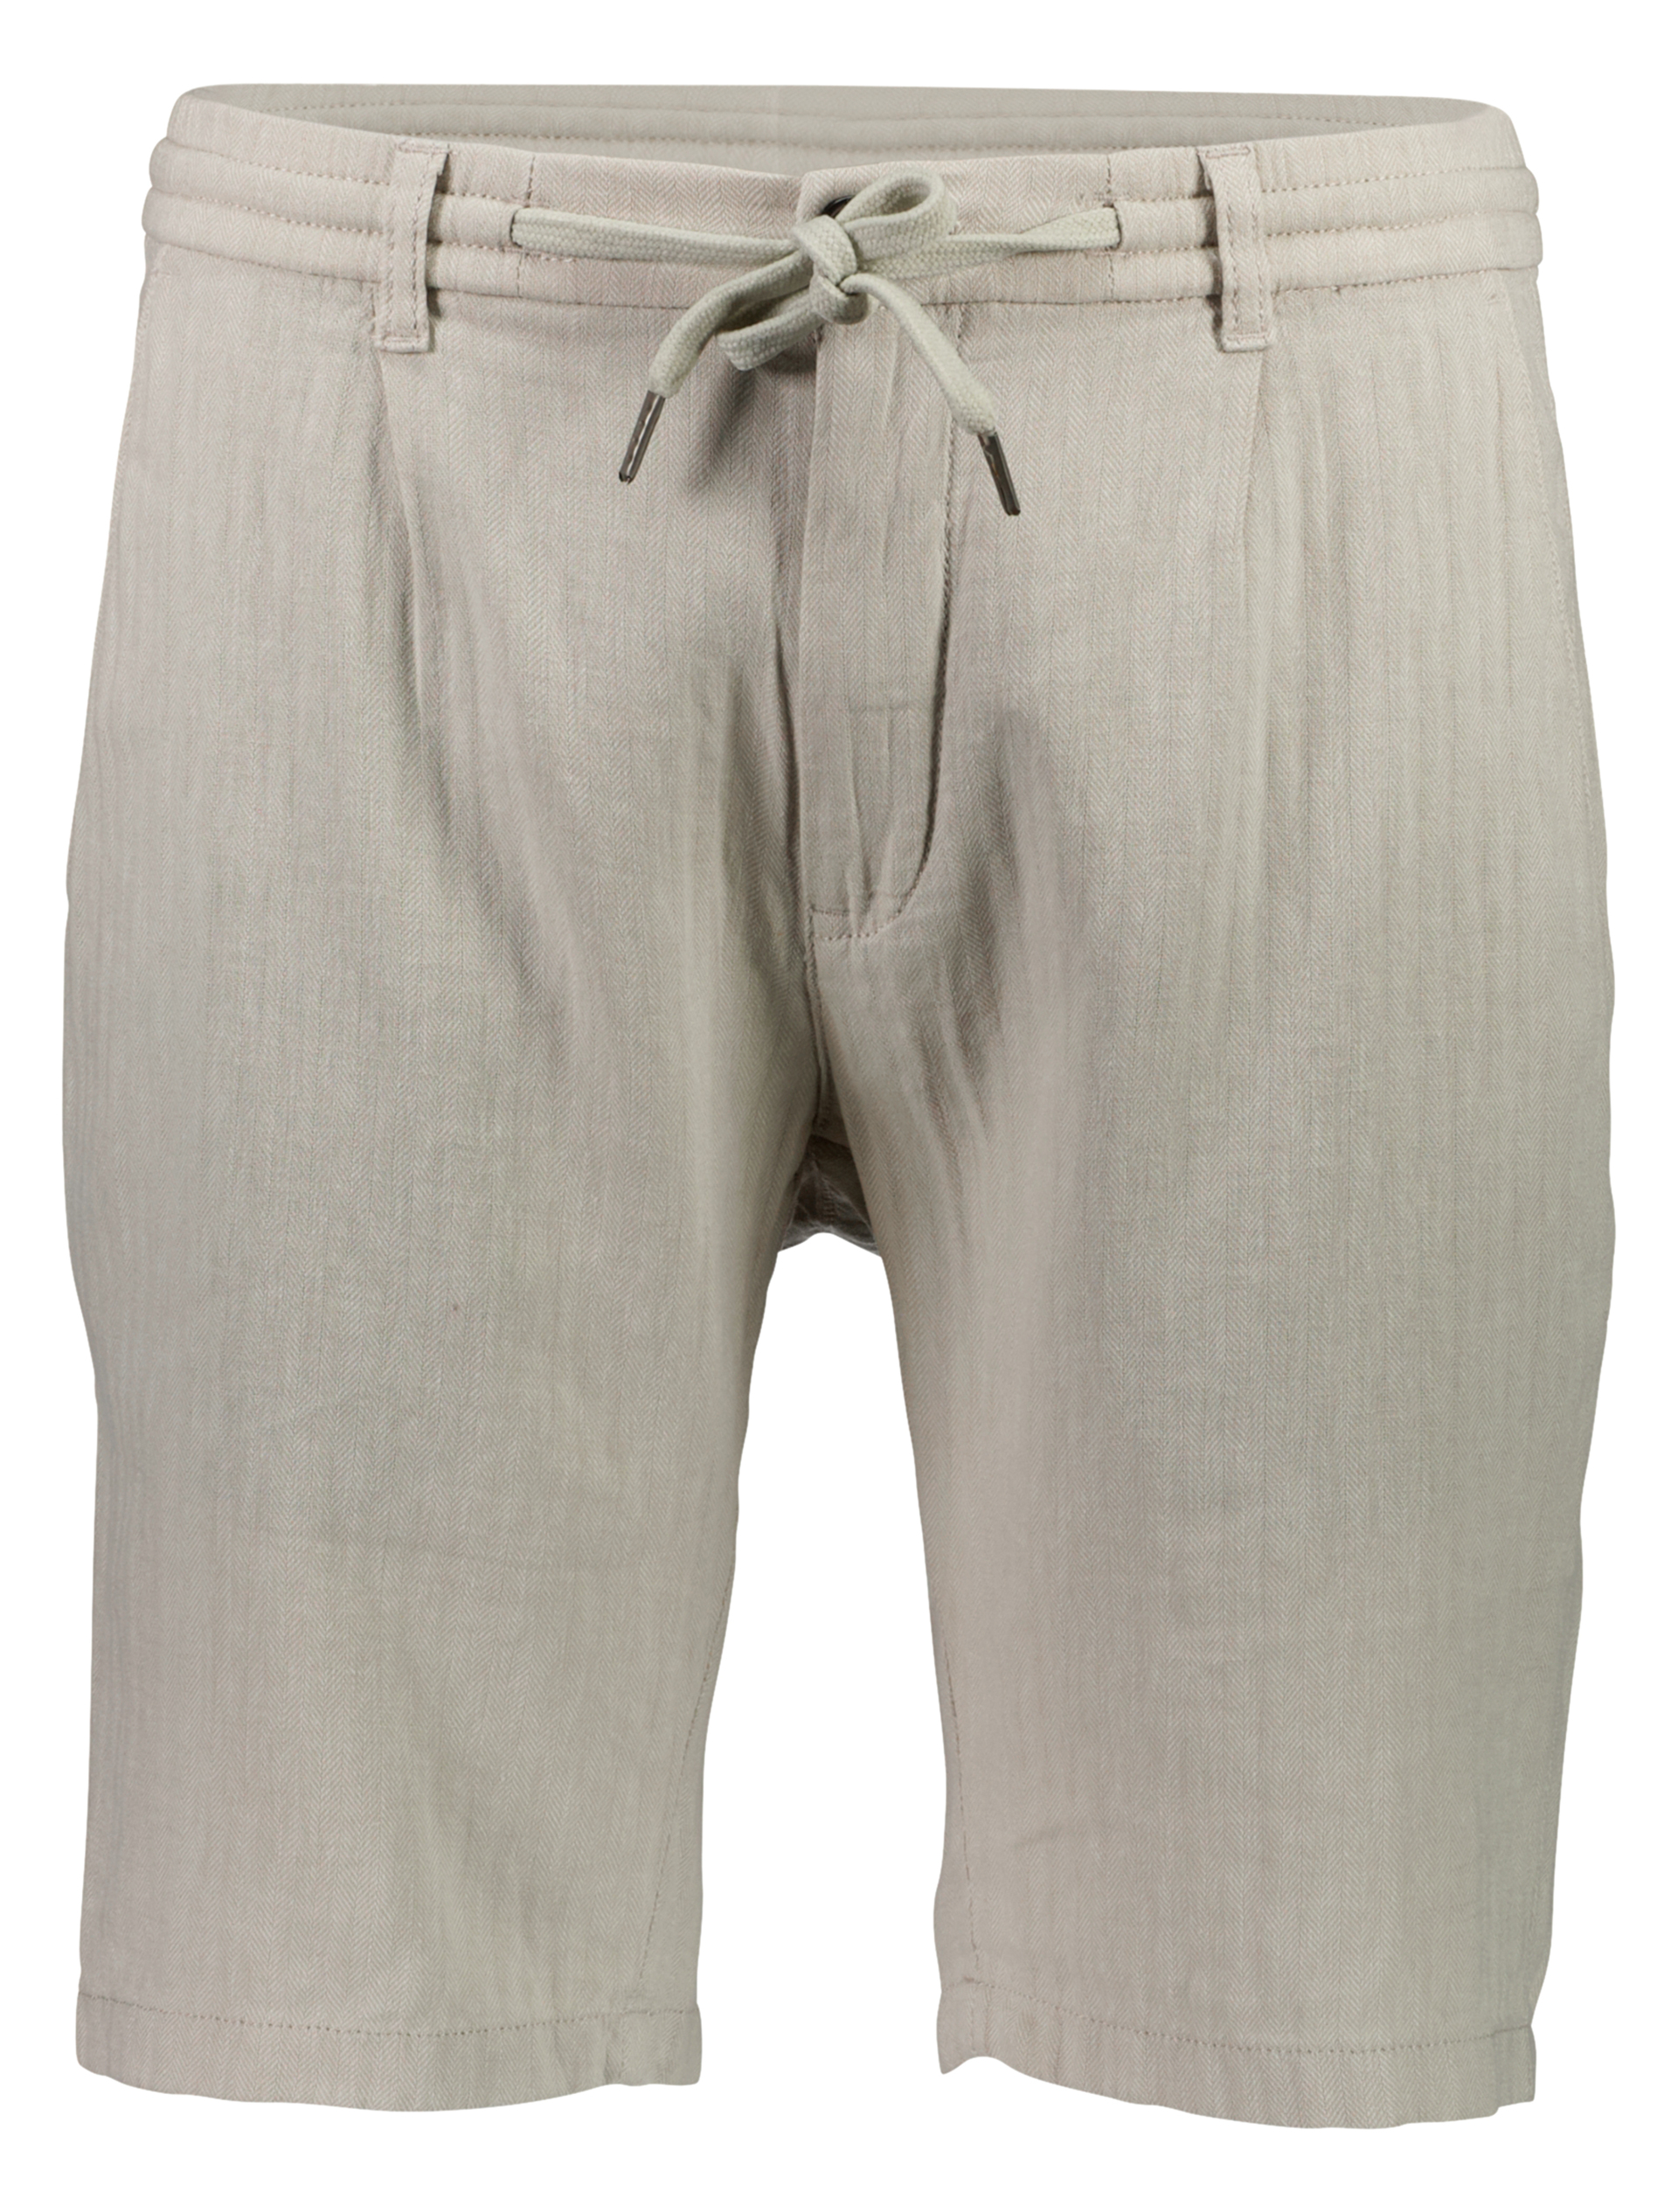 Lindbergh Linen shorts grey / lt stone